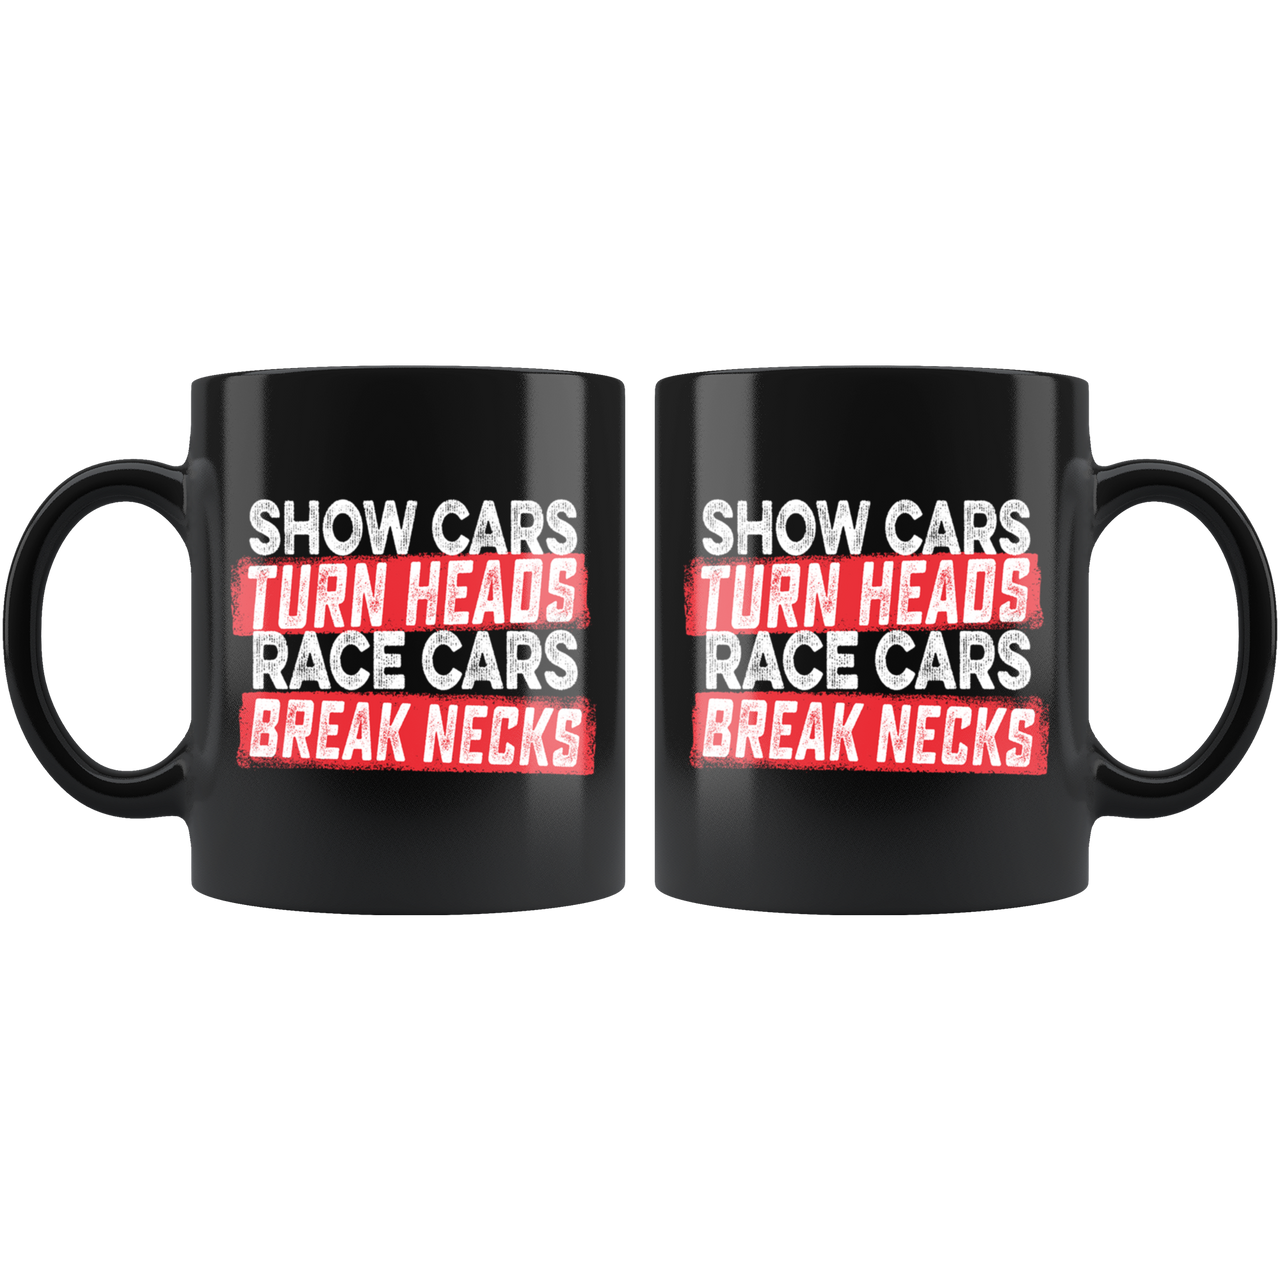 Show Cars Turn Heads Race Cars Break Necks Mug!